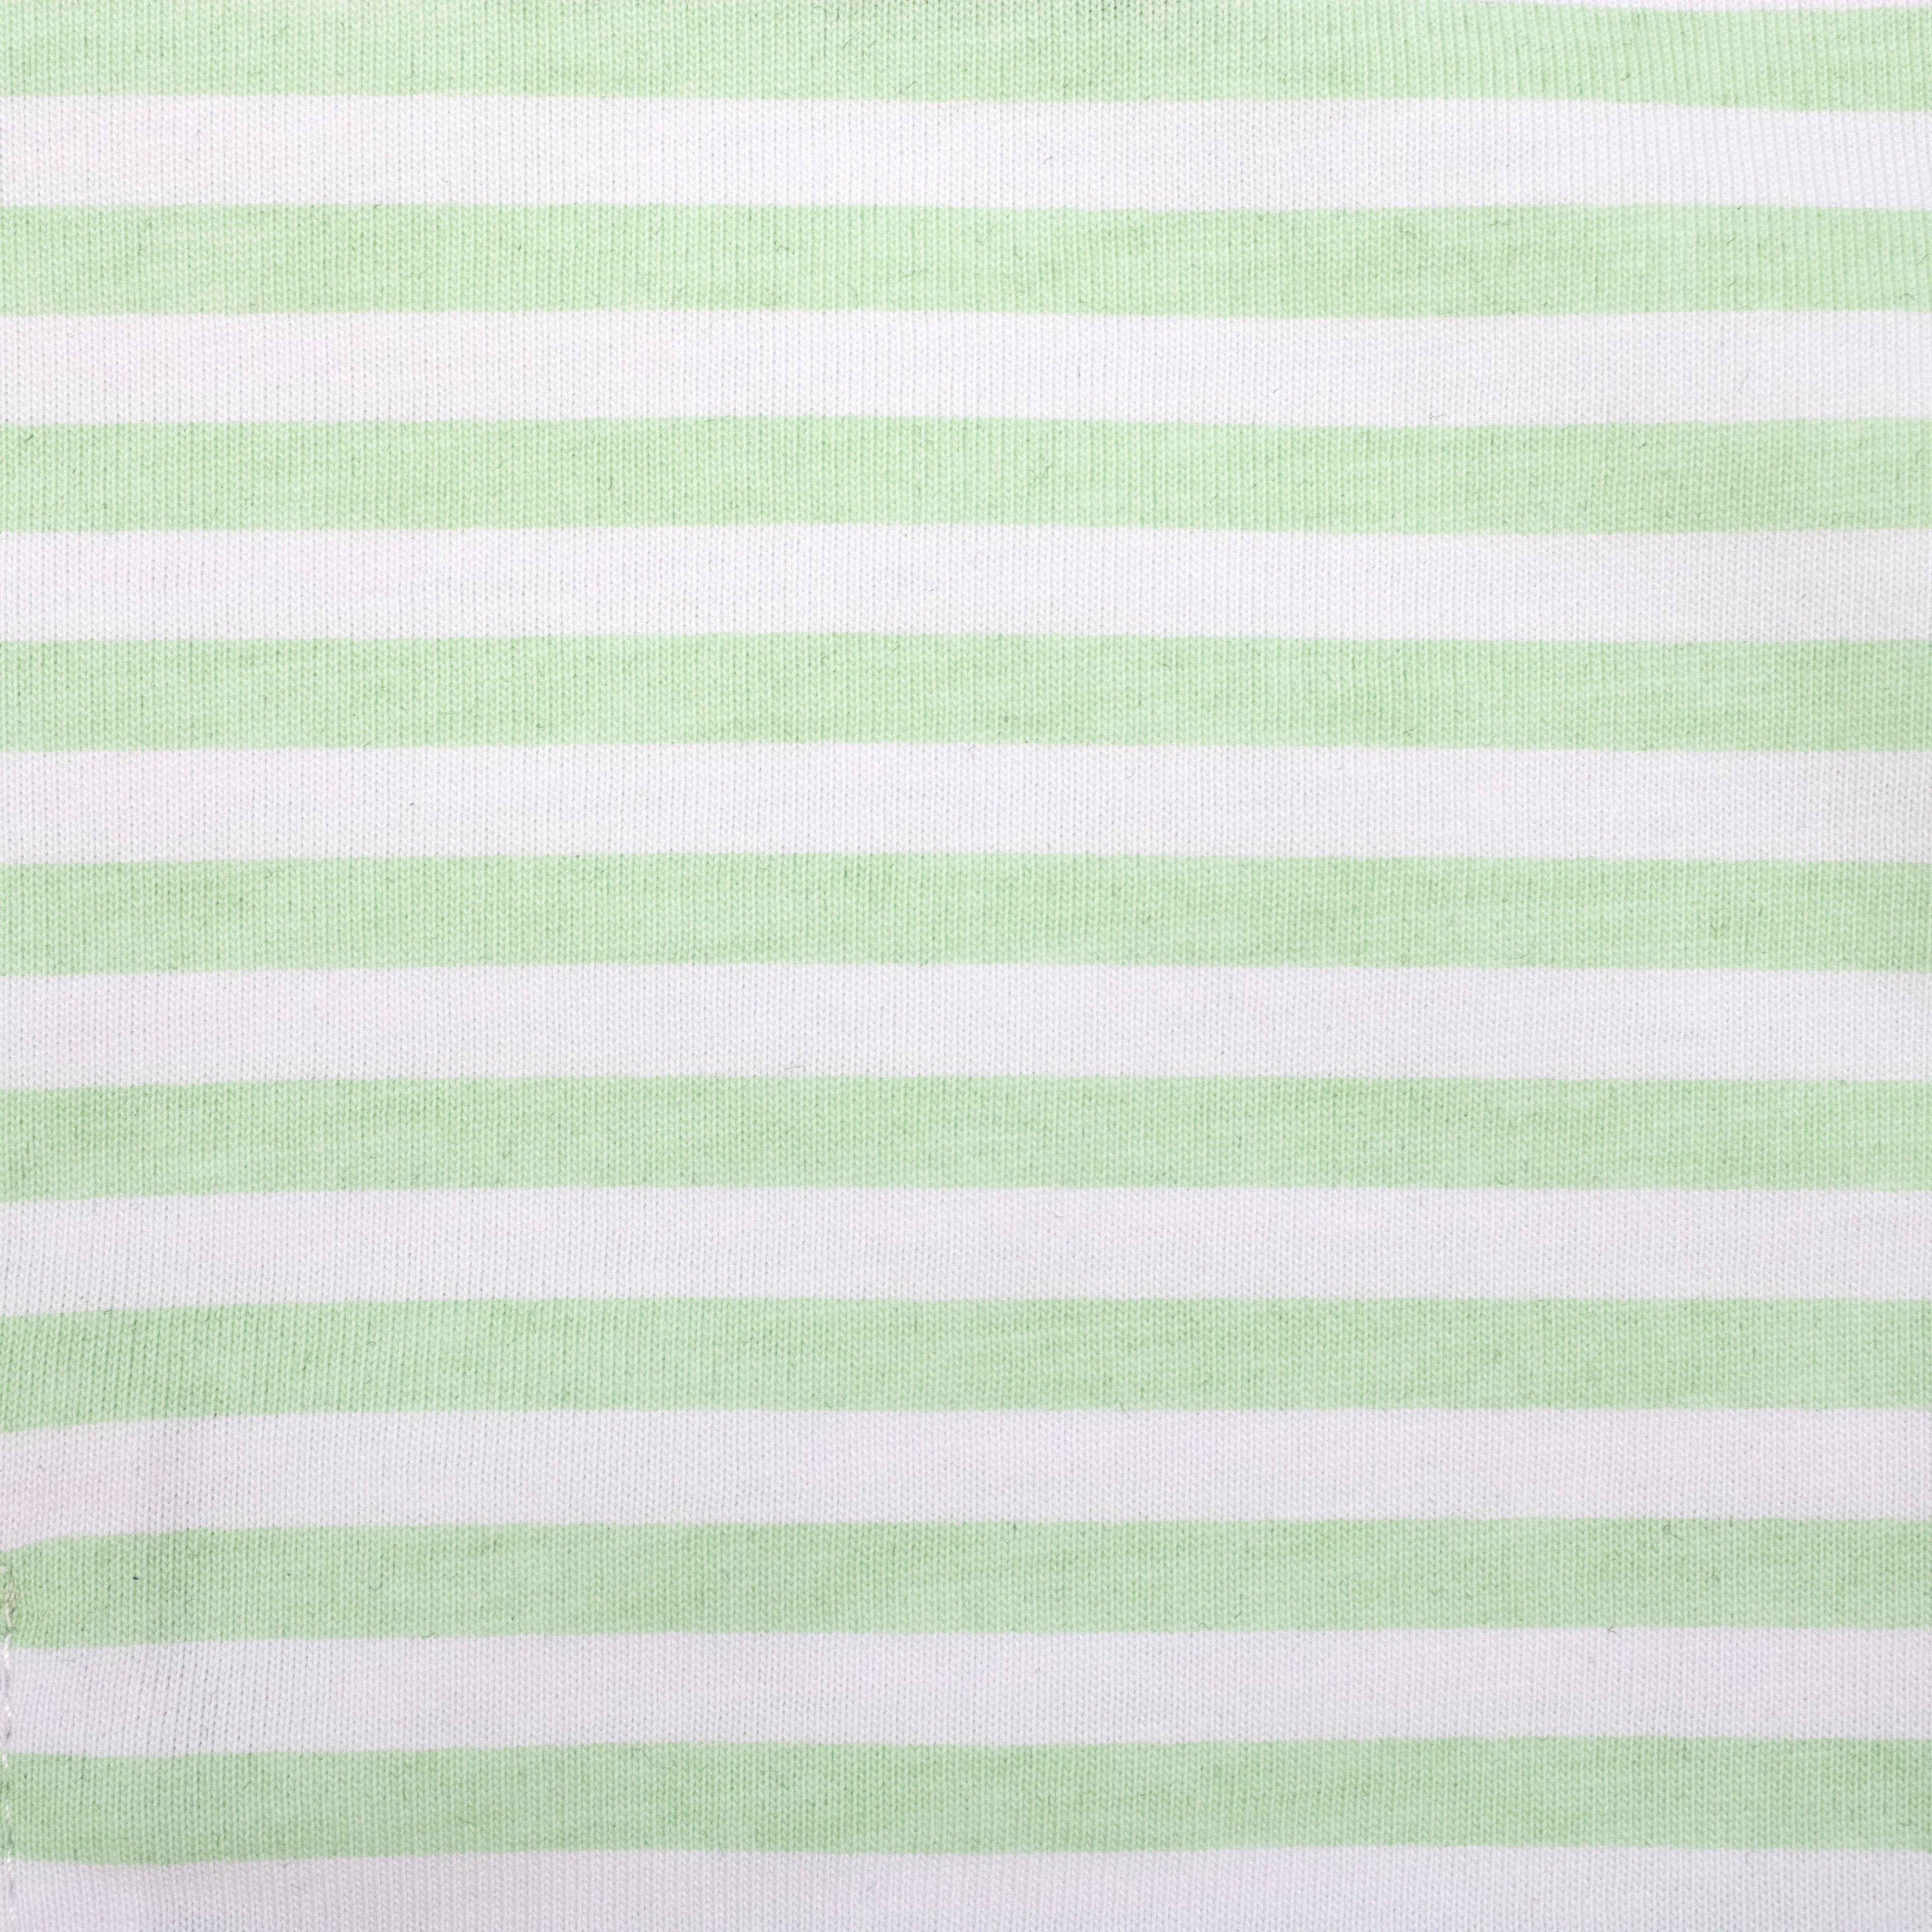 Mint stripe pattern up close